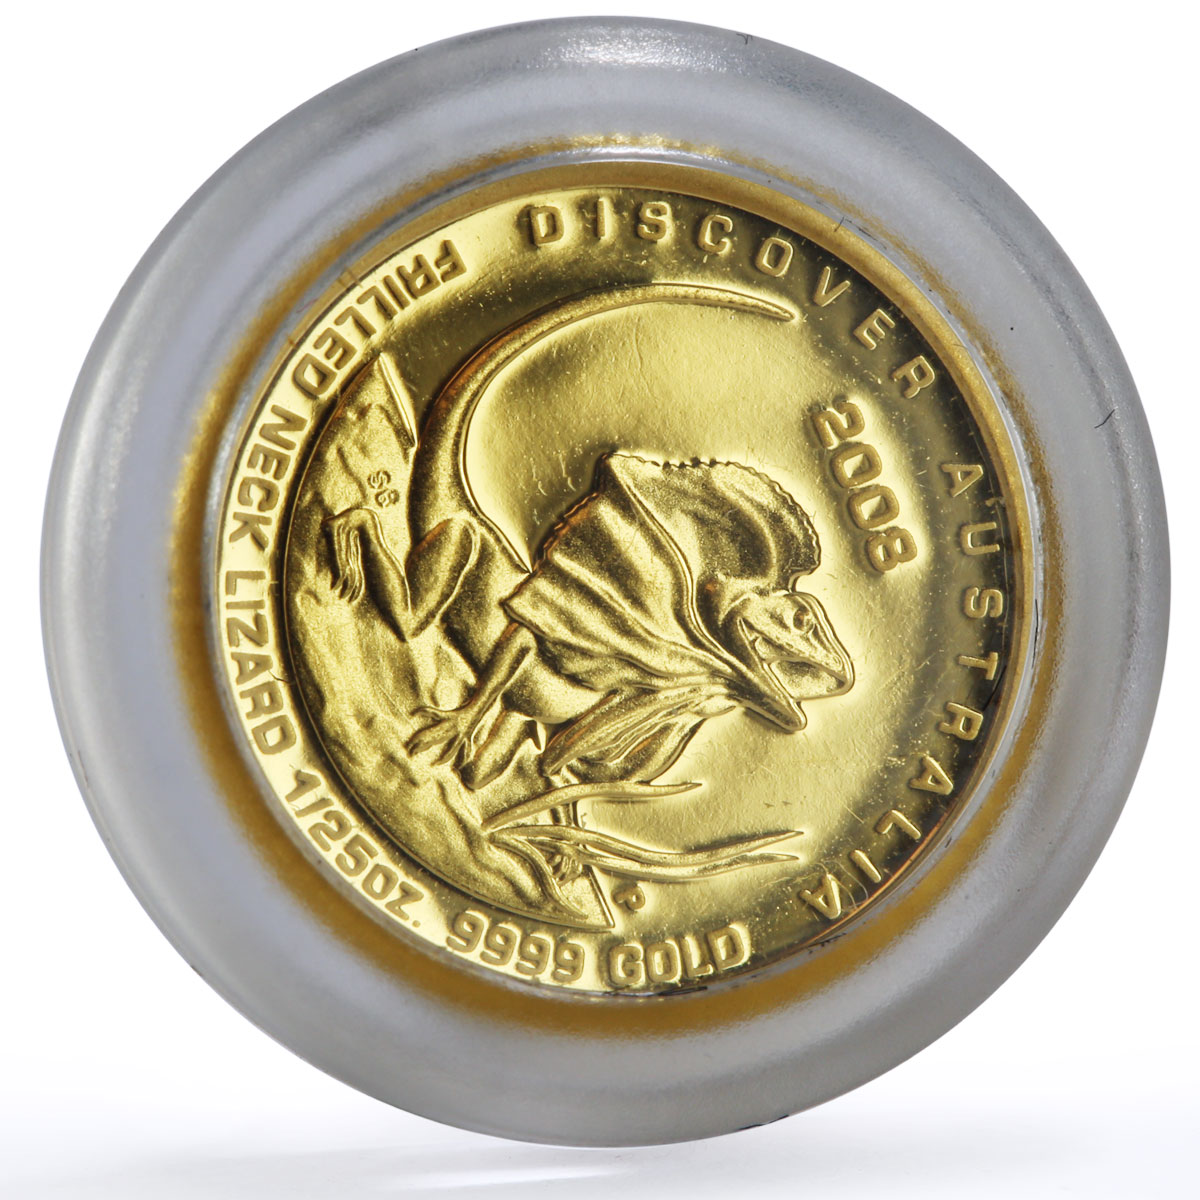 Australia 5 dollars Discovers Neck Lizard Animals Fauna proof gold coin 2008